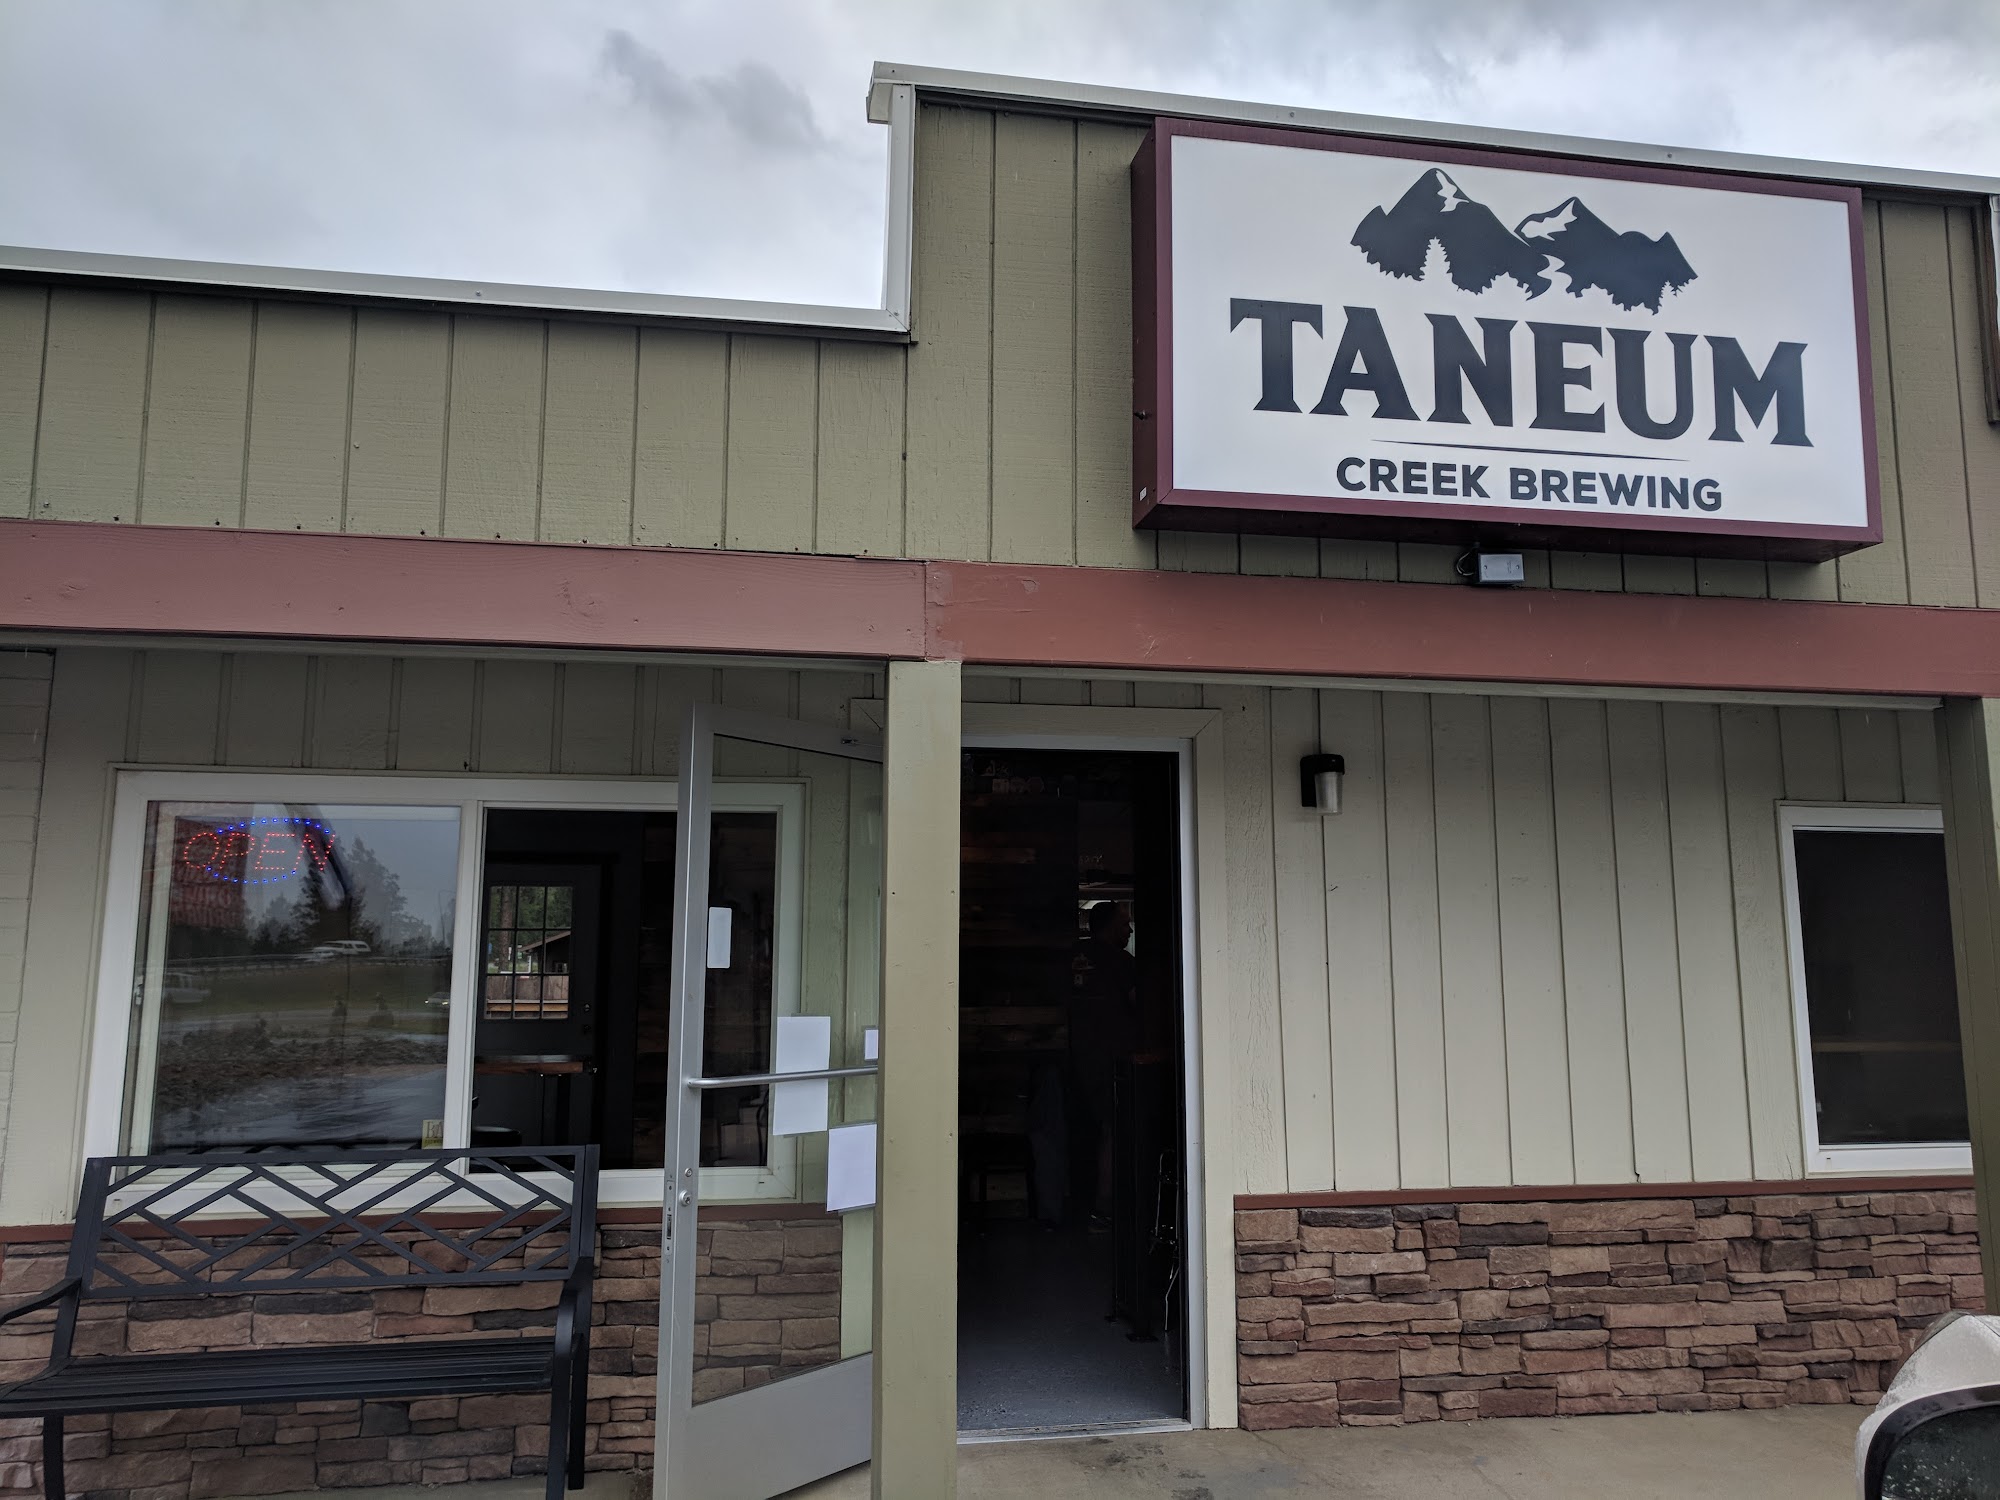 Taneum Creek Brewing